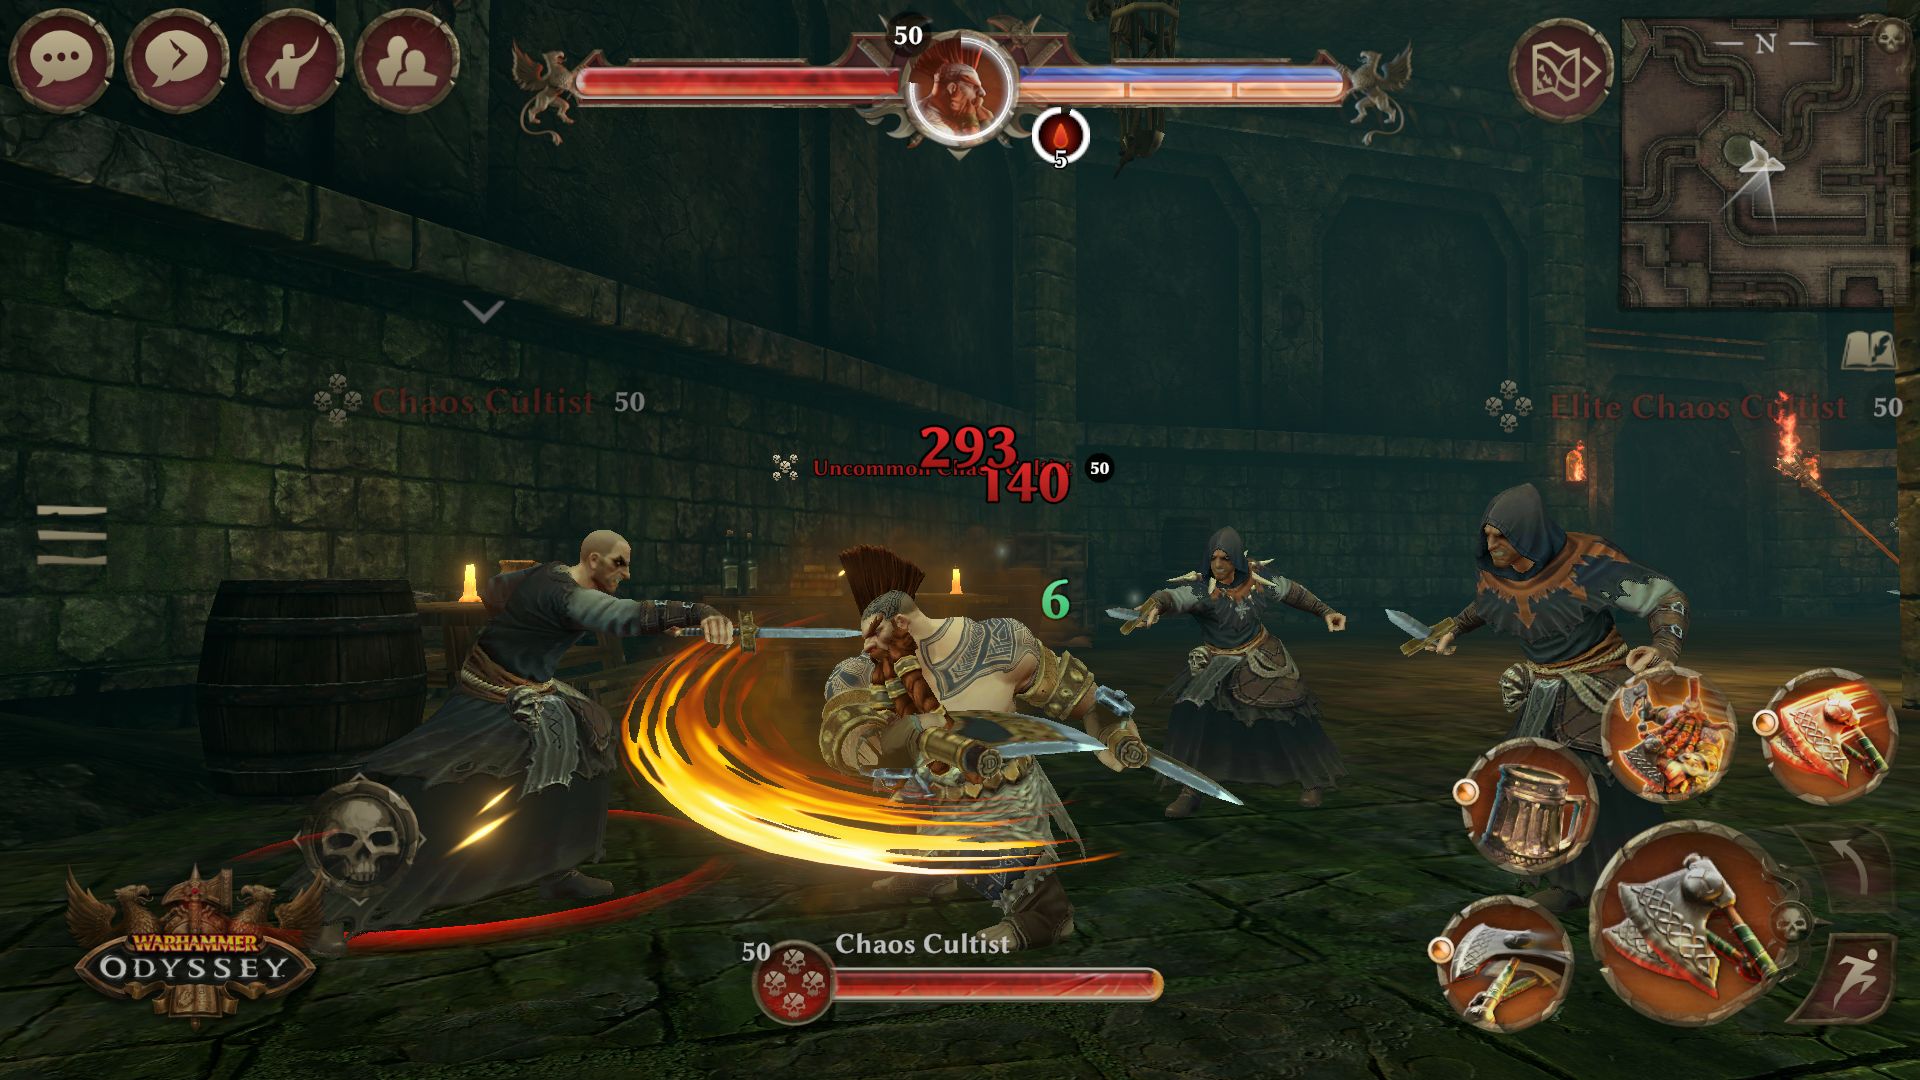 Warhammer: Odyssey captura de pantalla 1